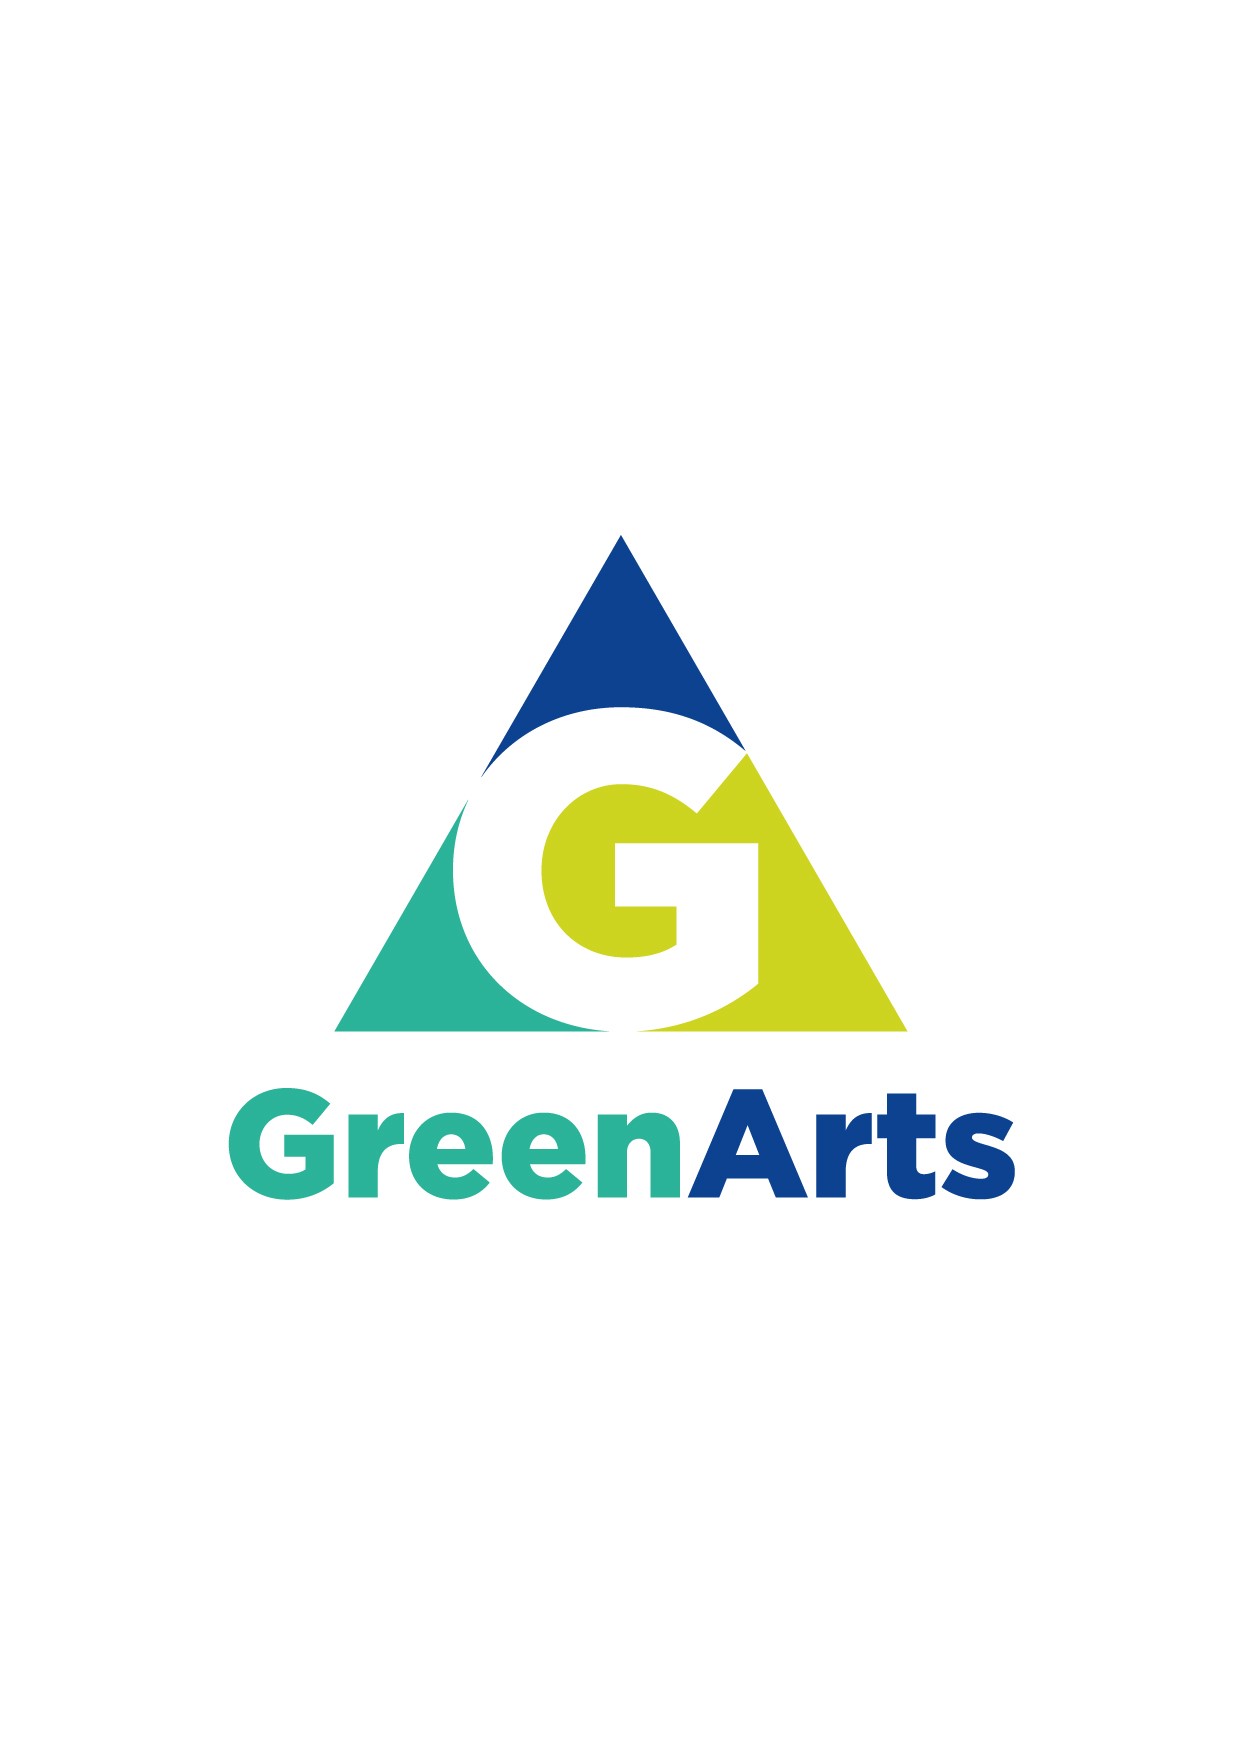 Greenfield Arts